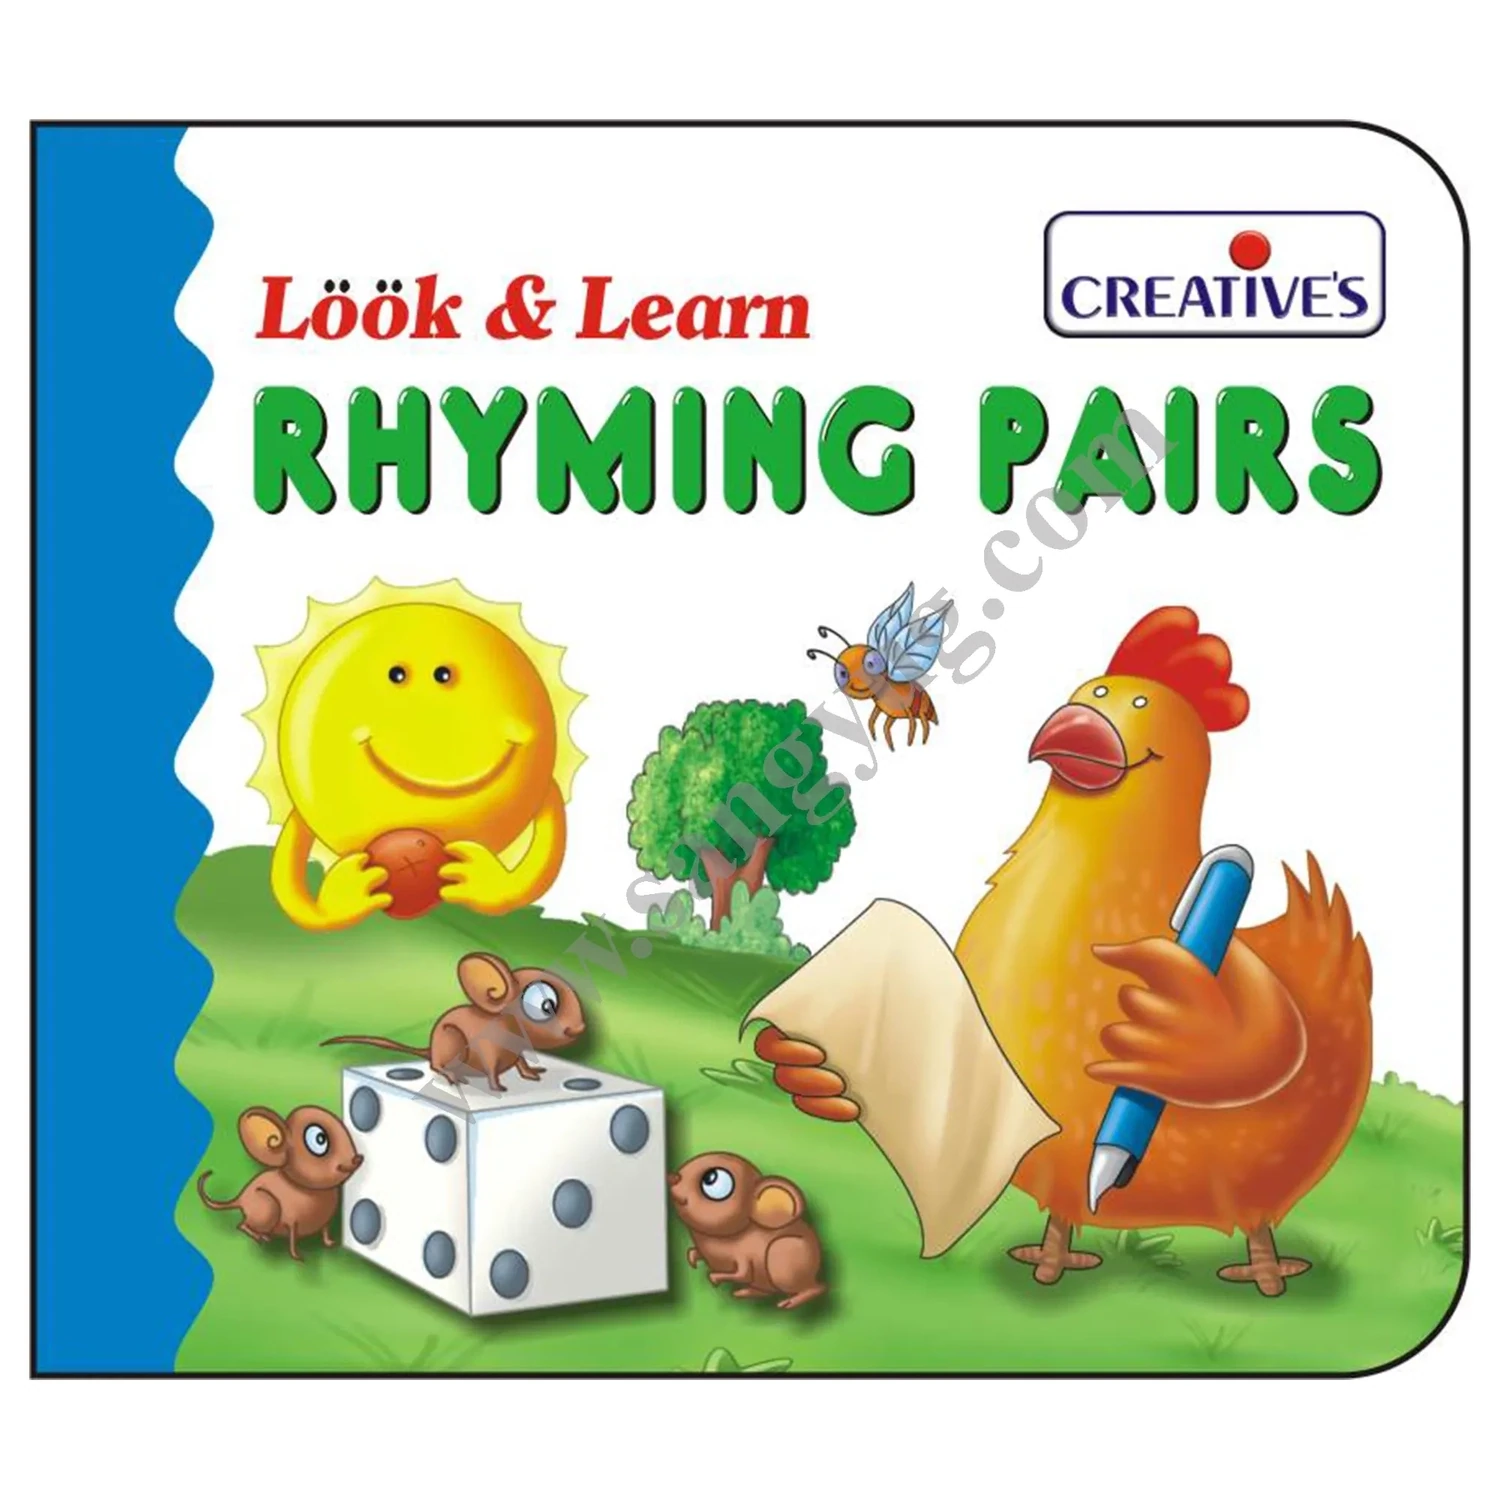 Creative look & learn board book - Rhyming pairs 556